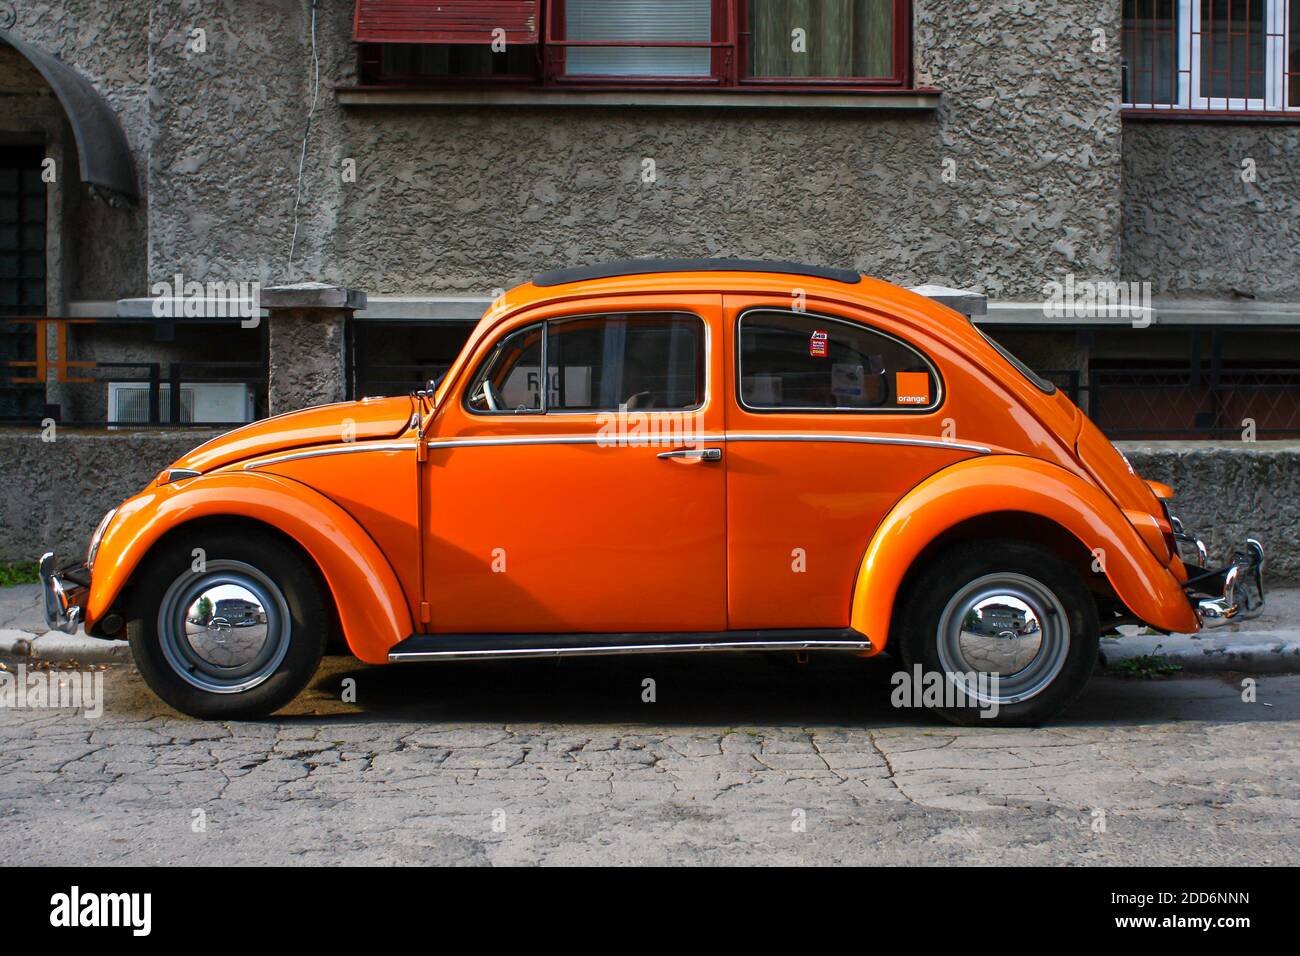 Bucharest, Romania - April 20, 2009: Orange vintage Volkswagen Beetle car on a street in Bucharest. Stock Photo